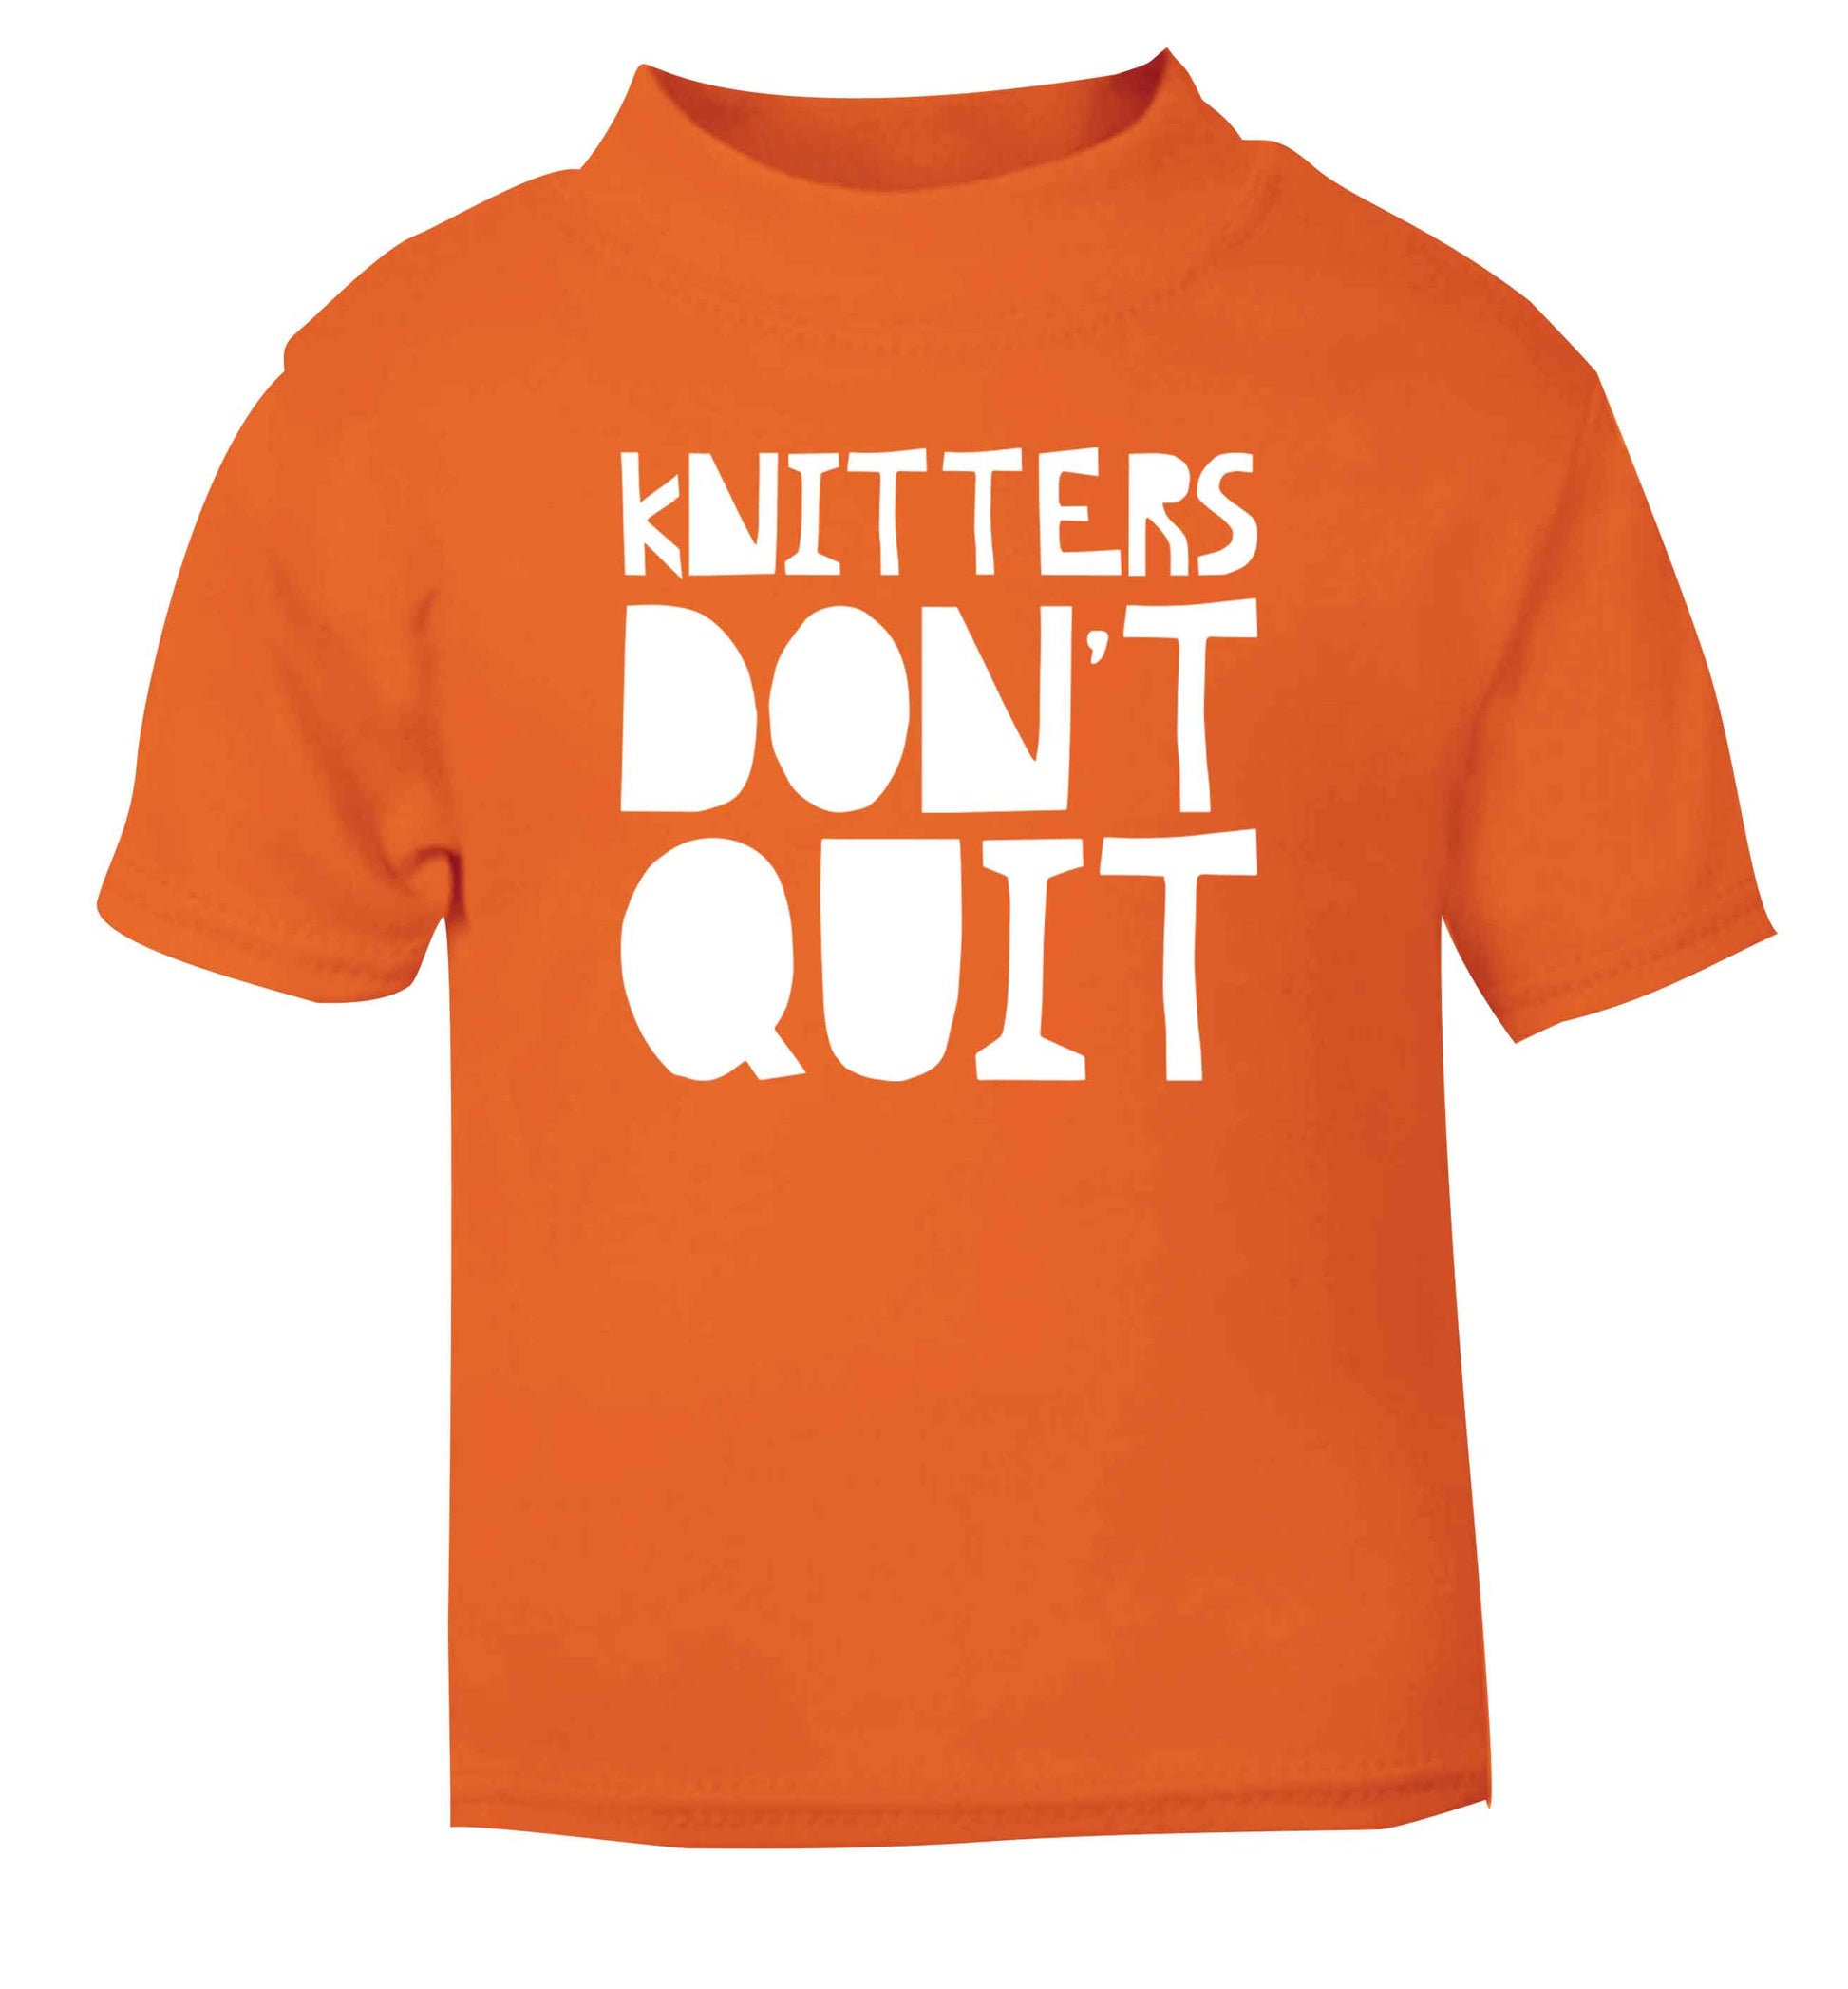 Knitters don't quit orange Baby Toddler Tshirt 2 Years